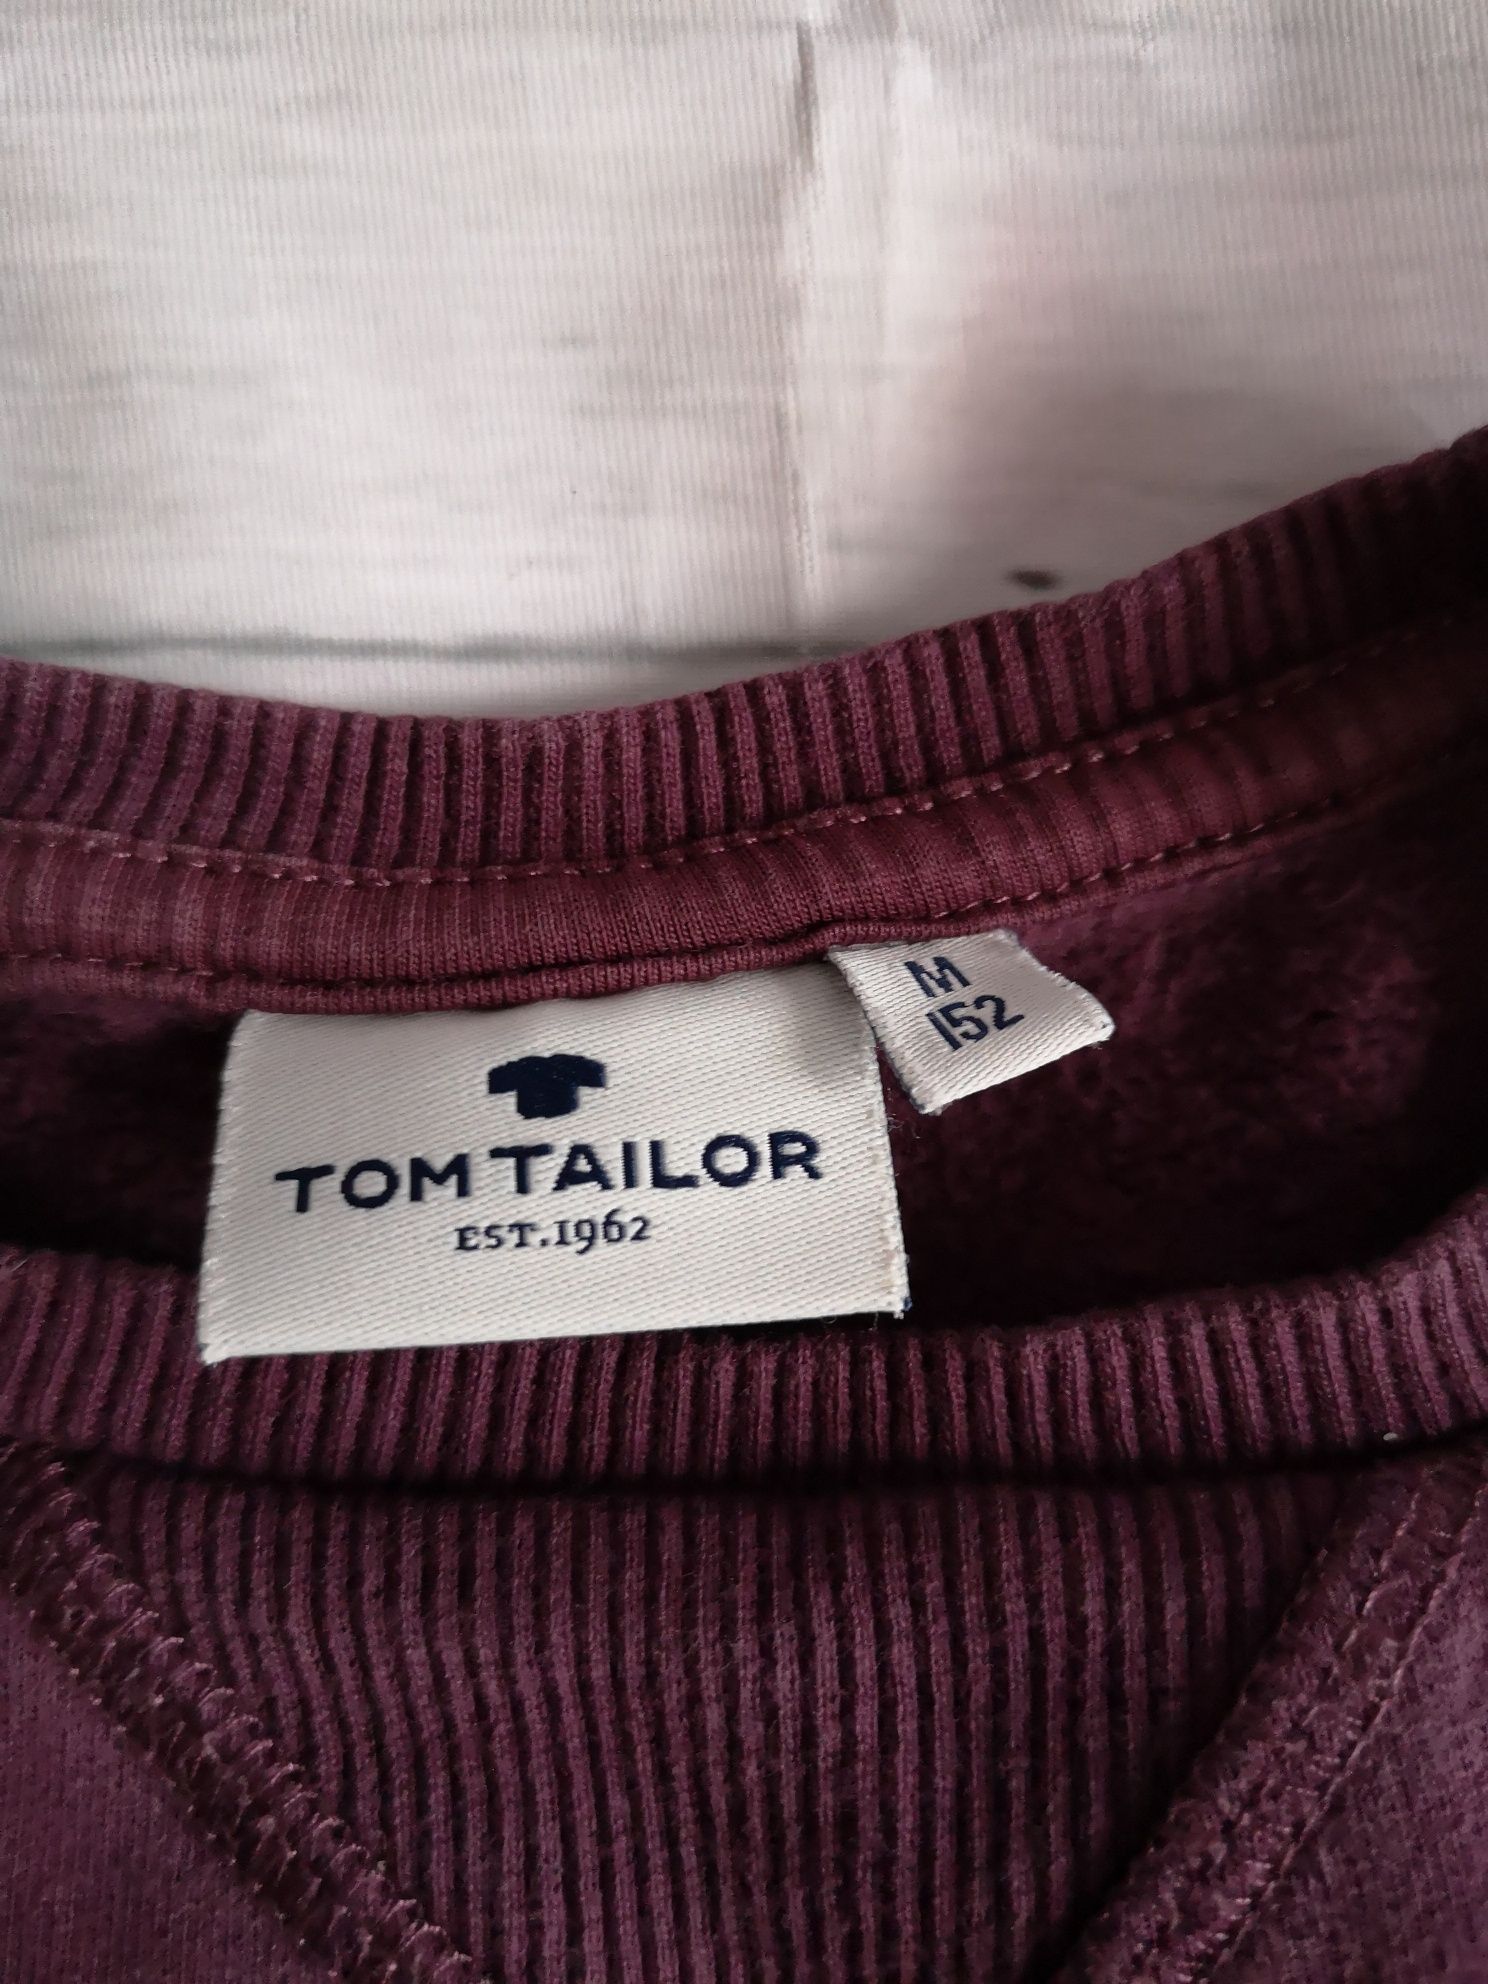 Bluza Tom Tailor